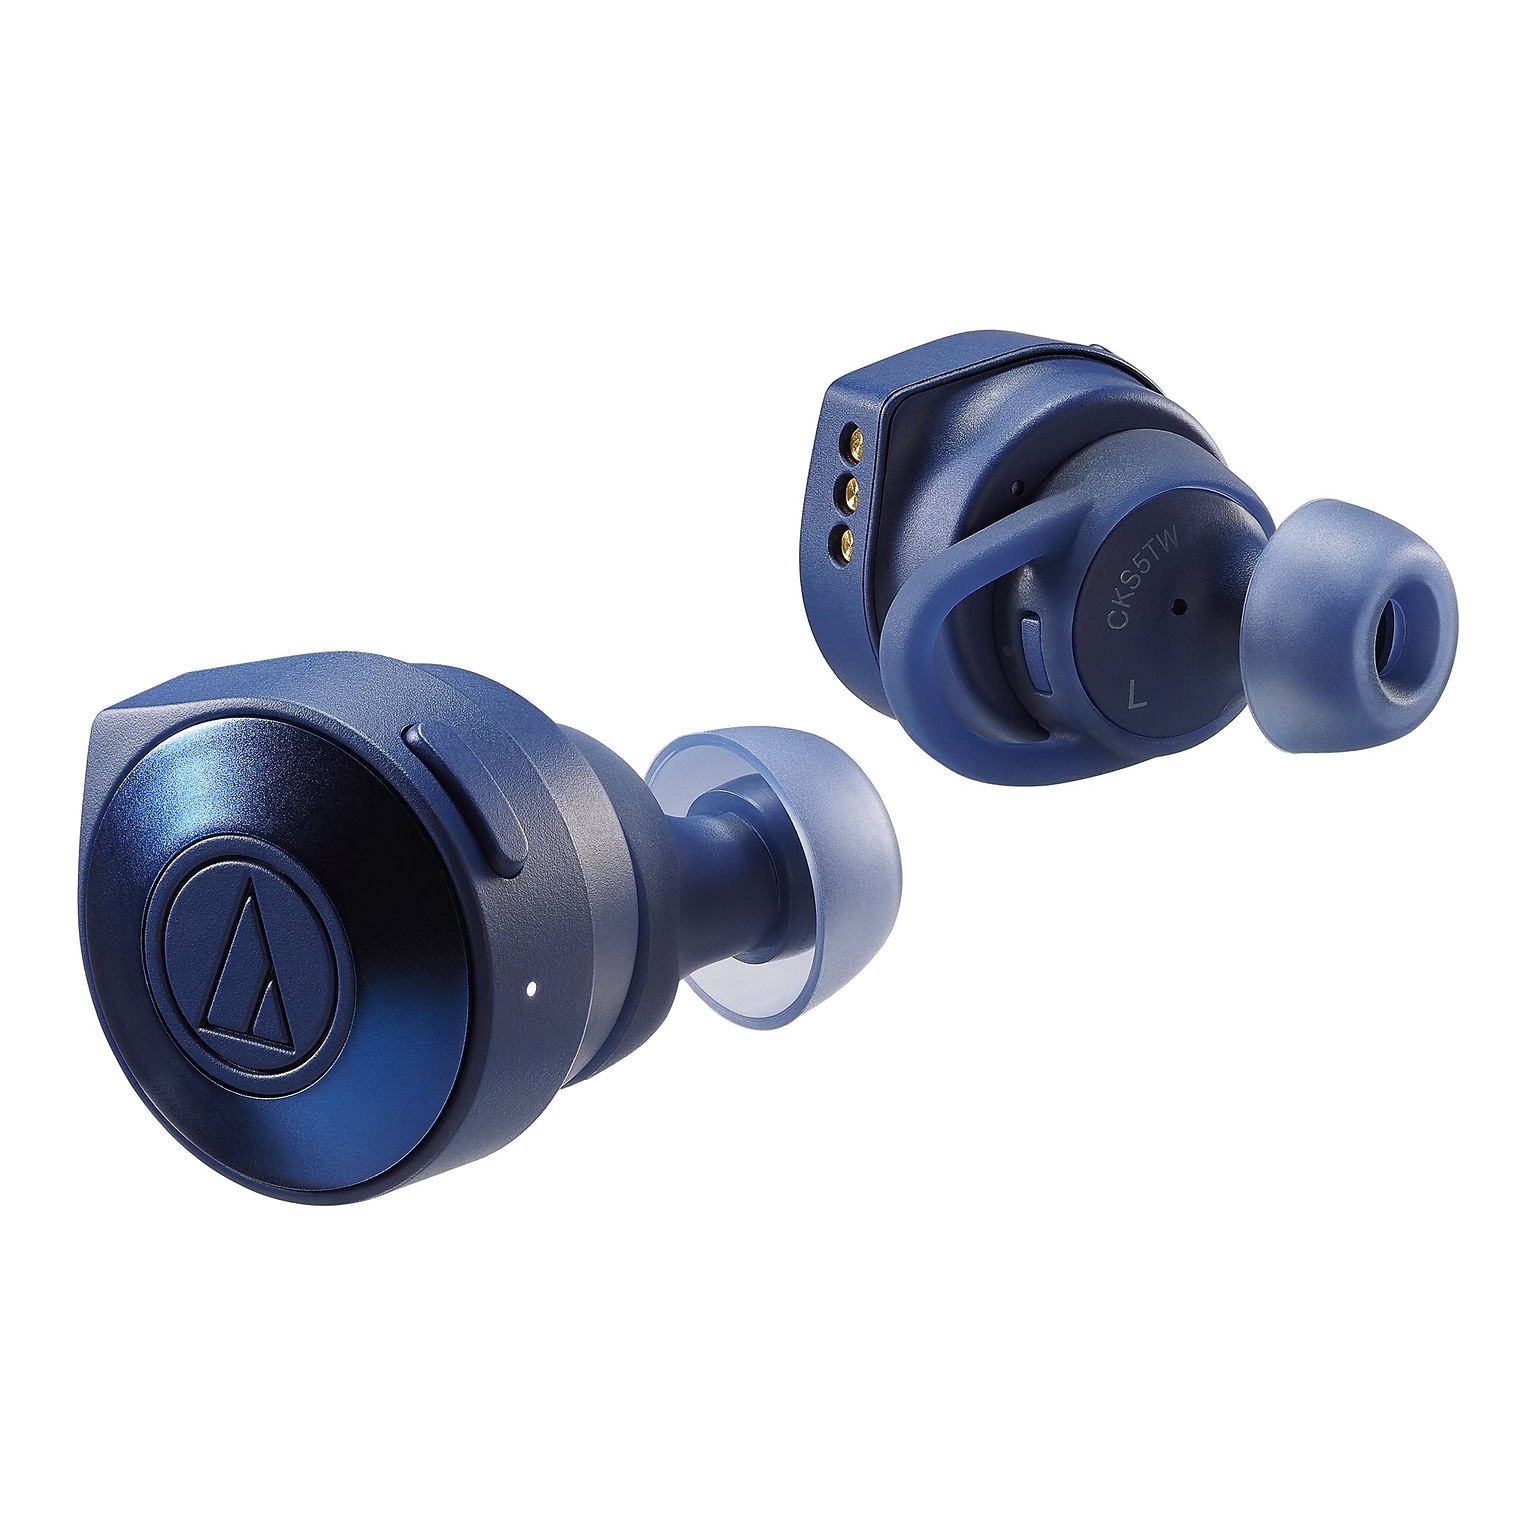 Audio-Technica SOLID BASS Wireless Earbuds Headphones, Bluetooth, Blue (ATH-CKS5TW BL)